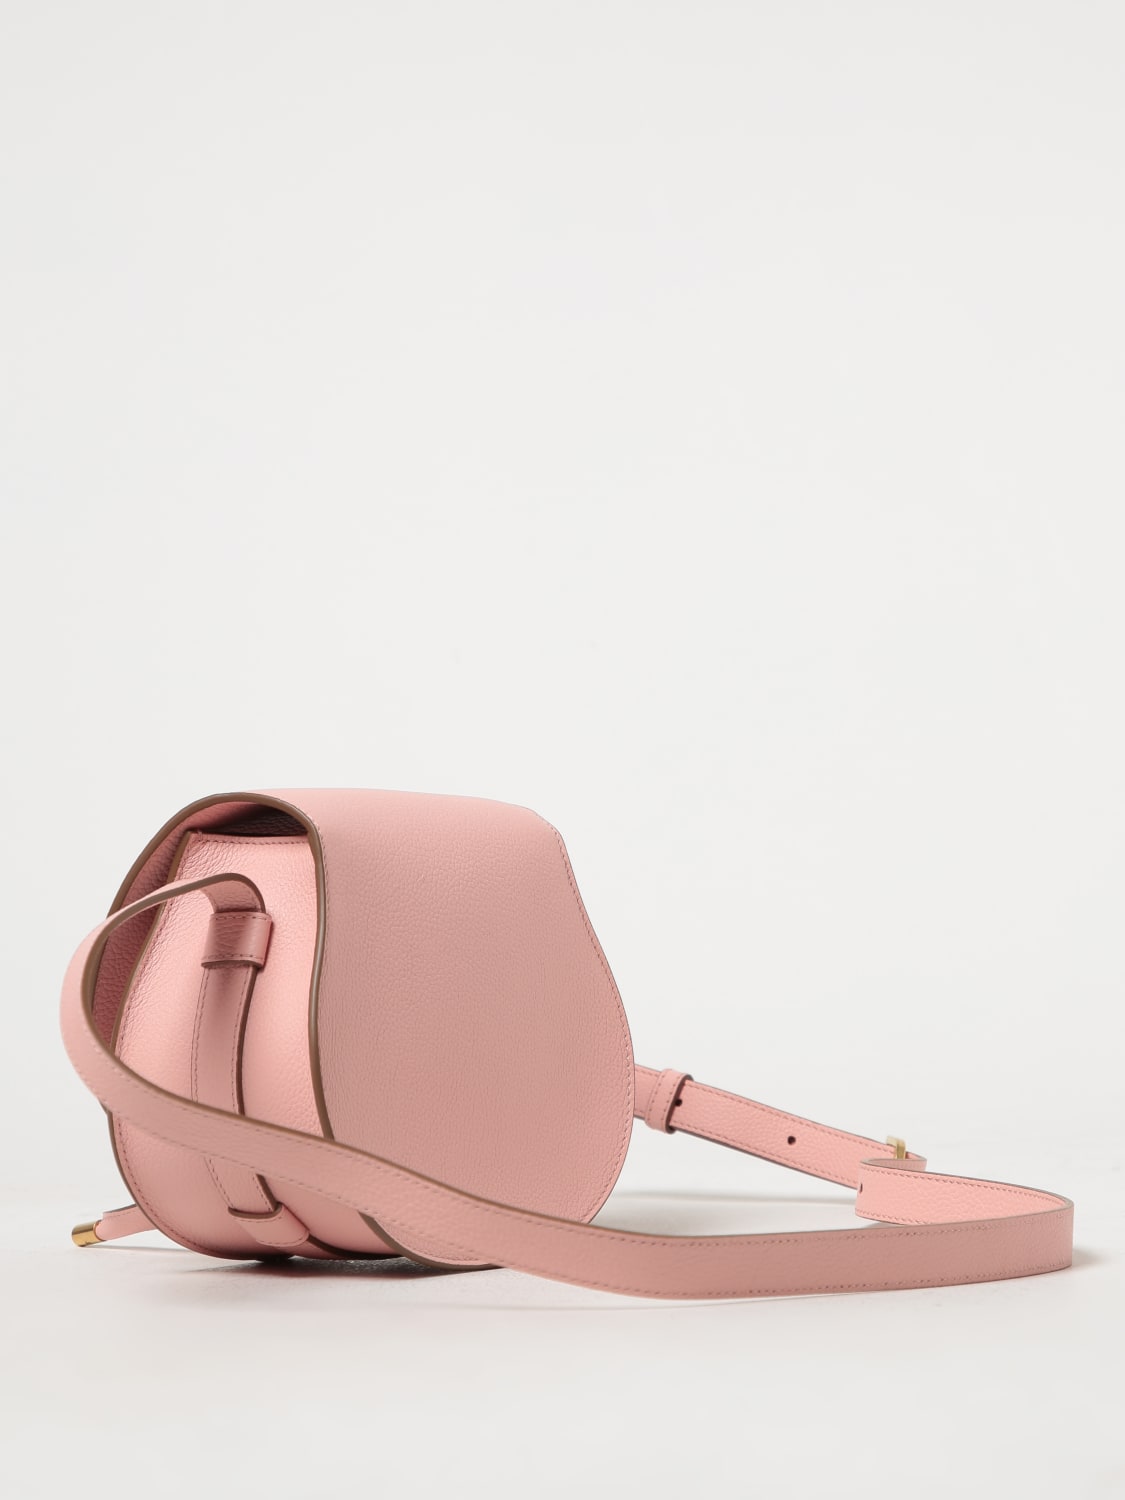 Mini Marcie pink leather bag